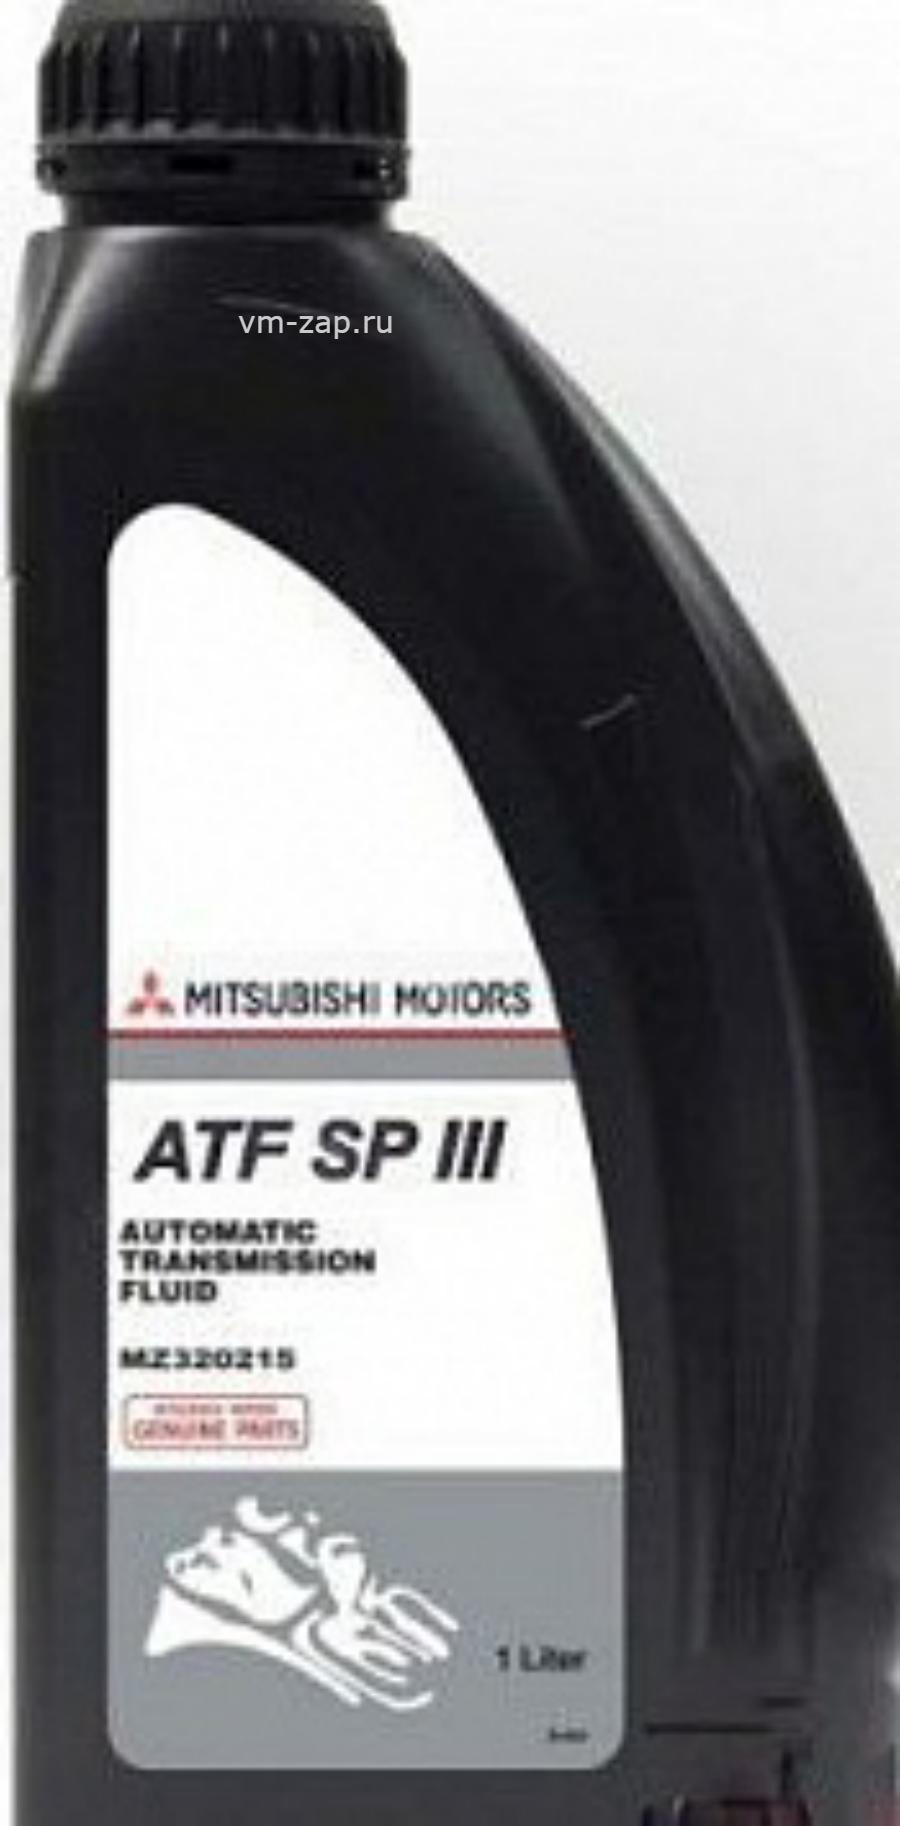 Sp3 артикул. ATF Mitsubishi 1l. Масло Mitsubishi ATF SP-III. Mitsubishi ATF SP-III для АКПП (1л). Масло Митсубиси ATF sp3.